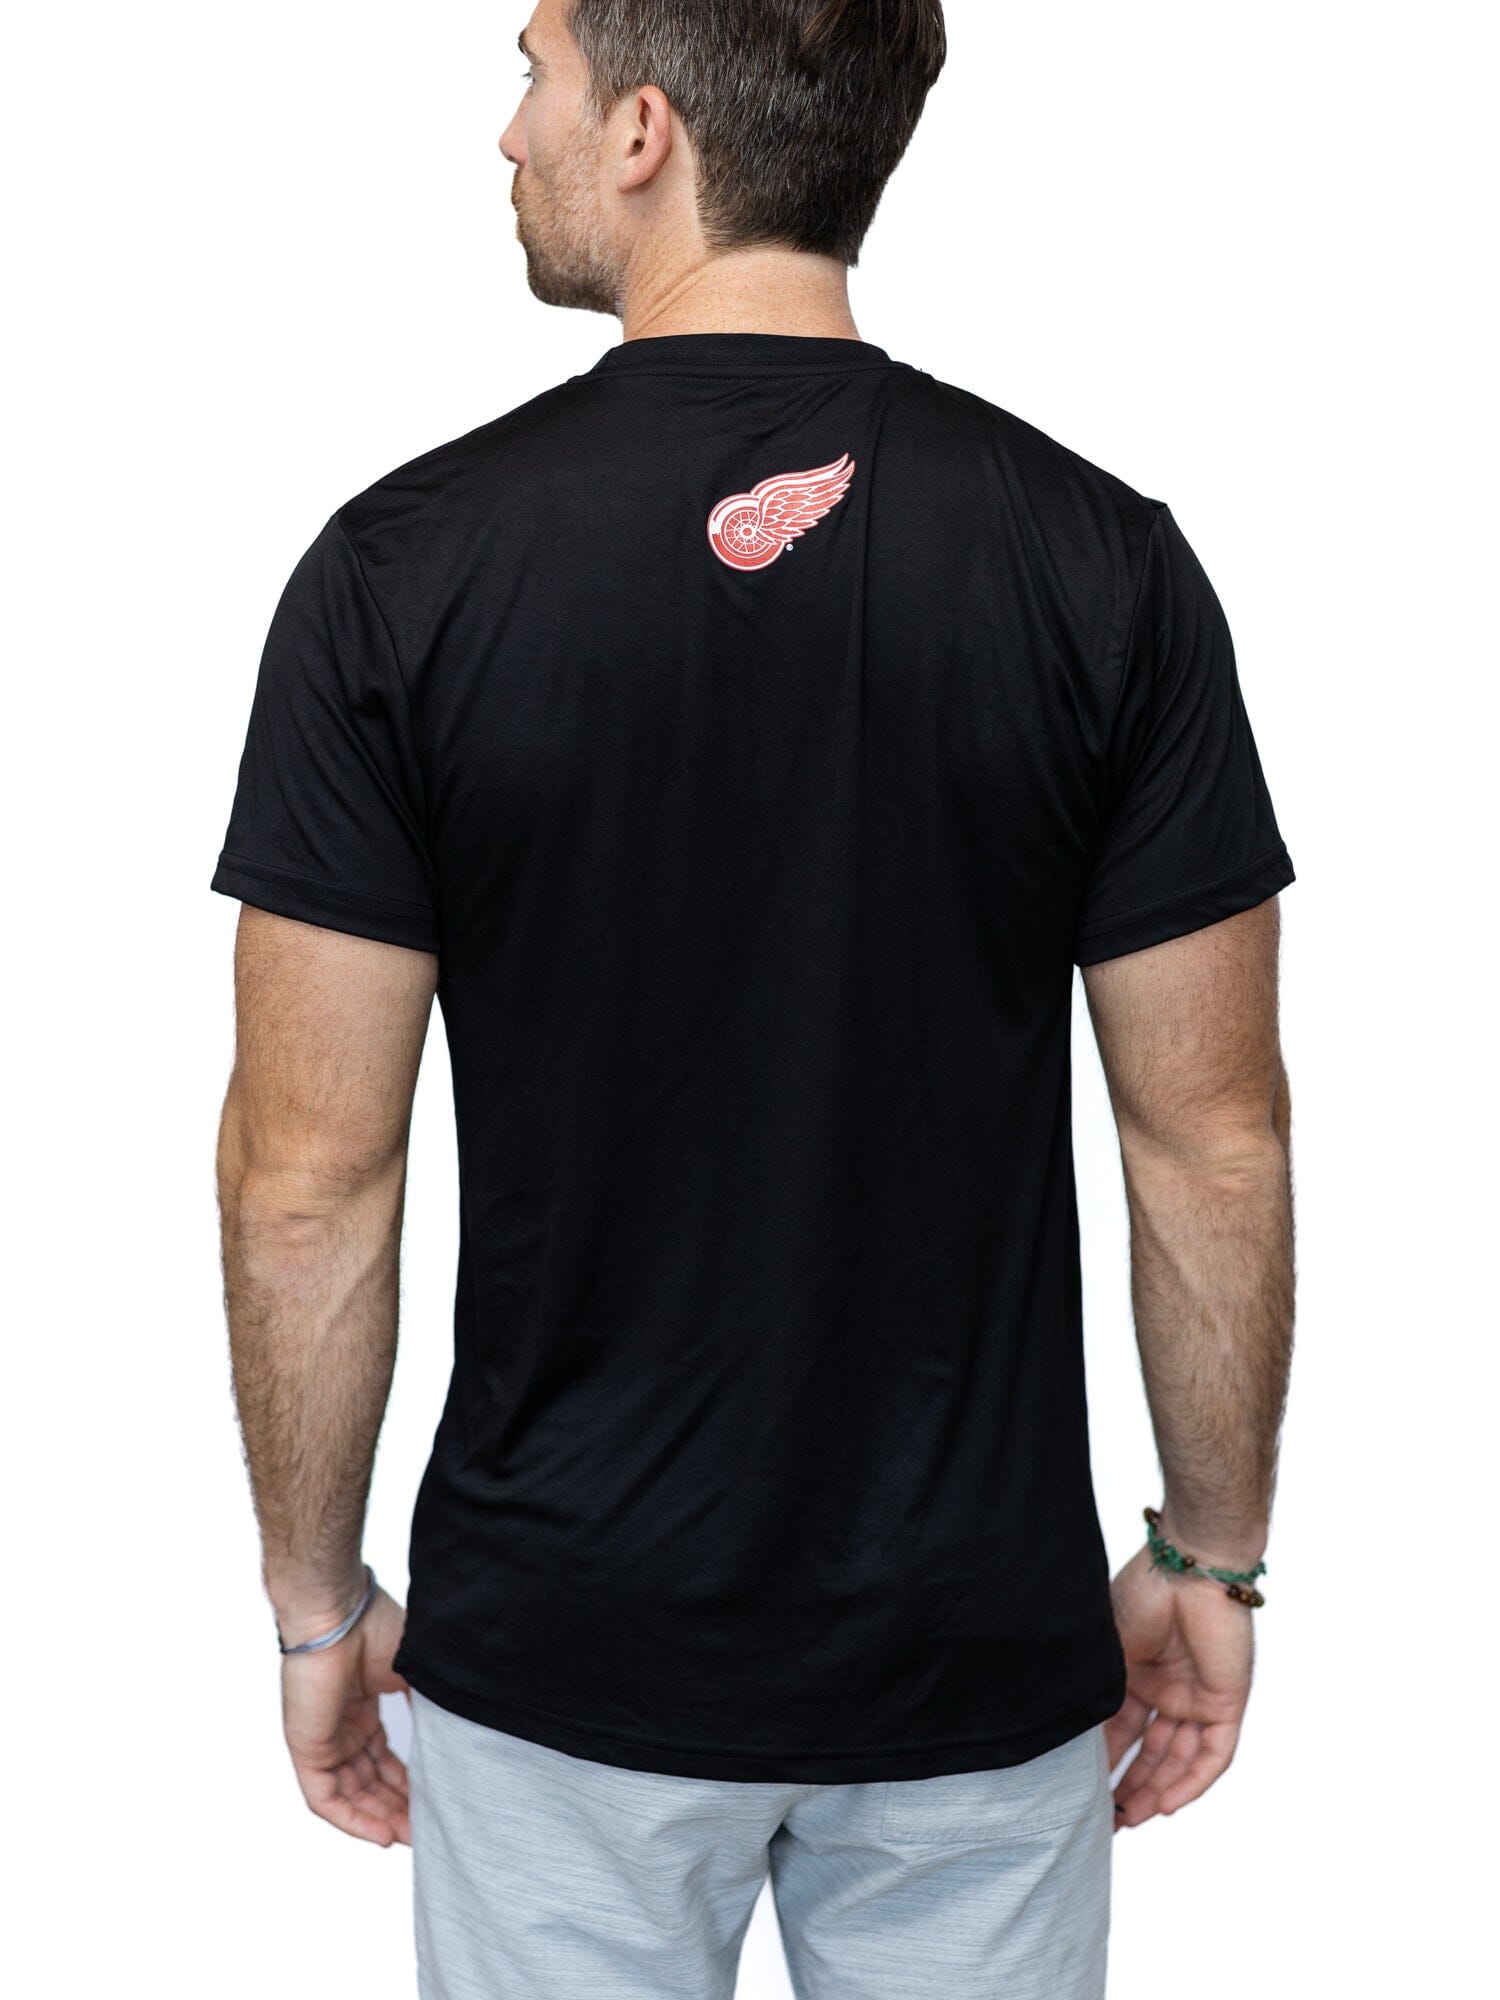 Detroit Red Wings The Punisher Mashup Shirt - Huneni Store